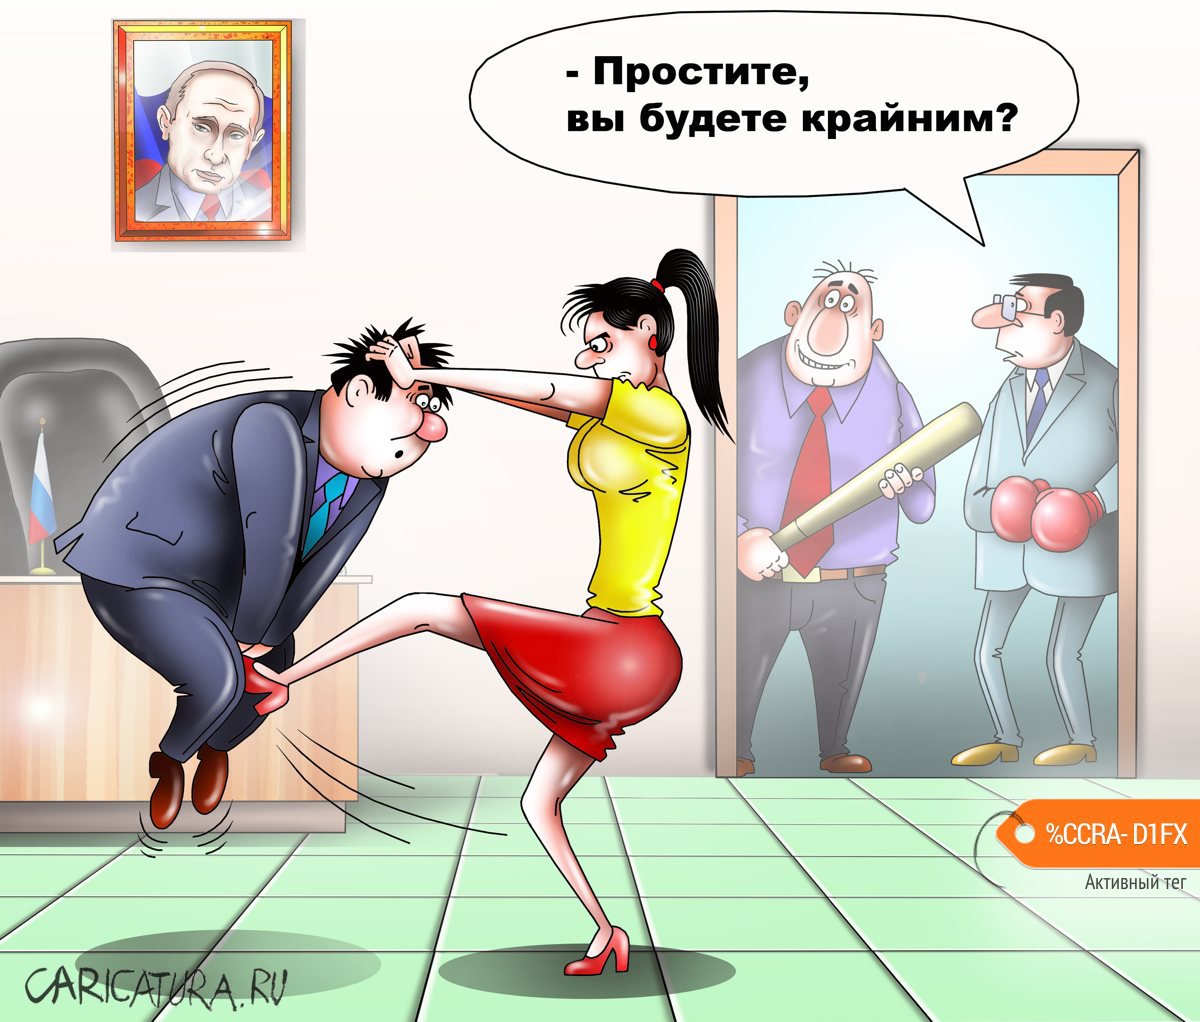 Карикатура "Путин призвал "трясти" чиновников", Сергей Корсун